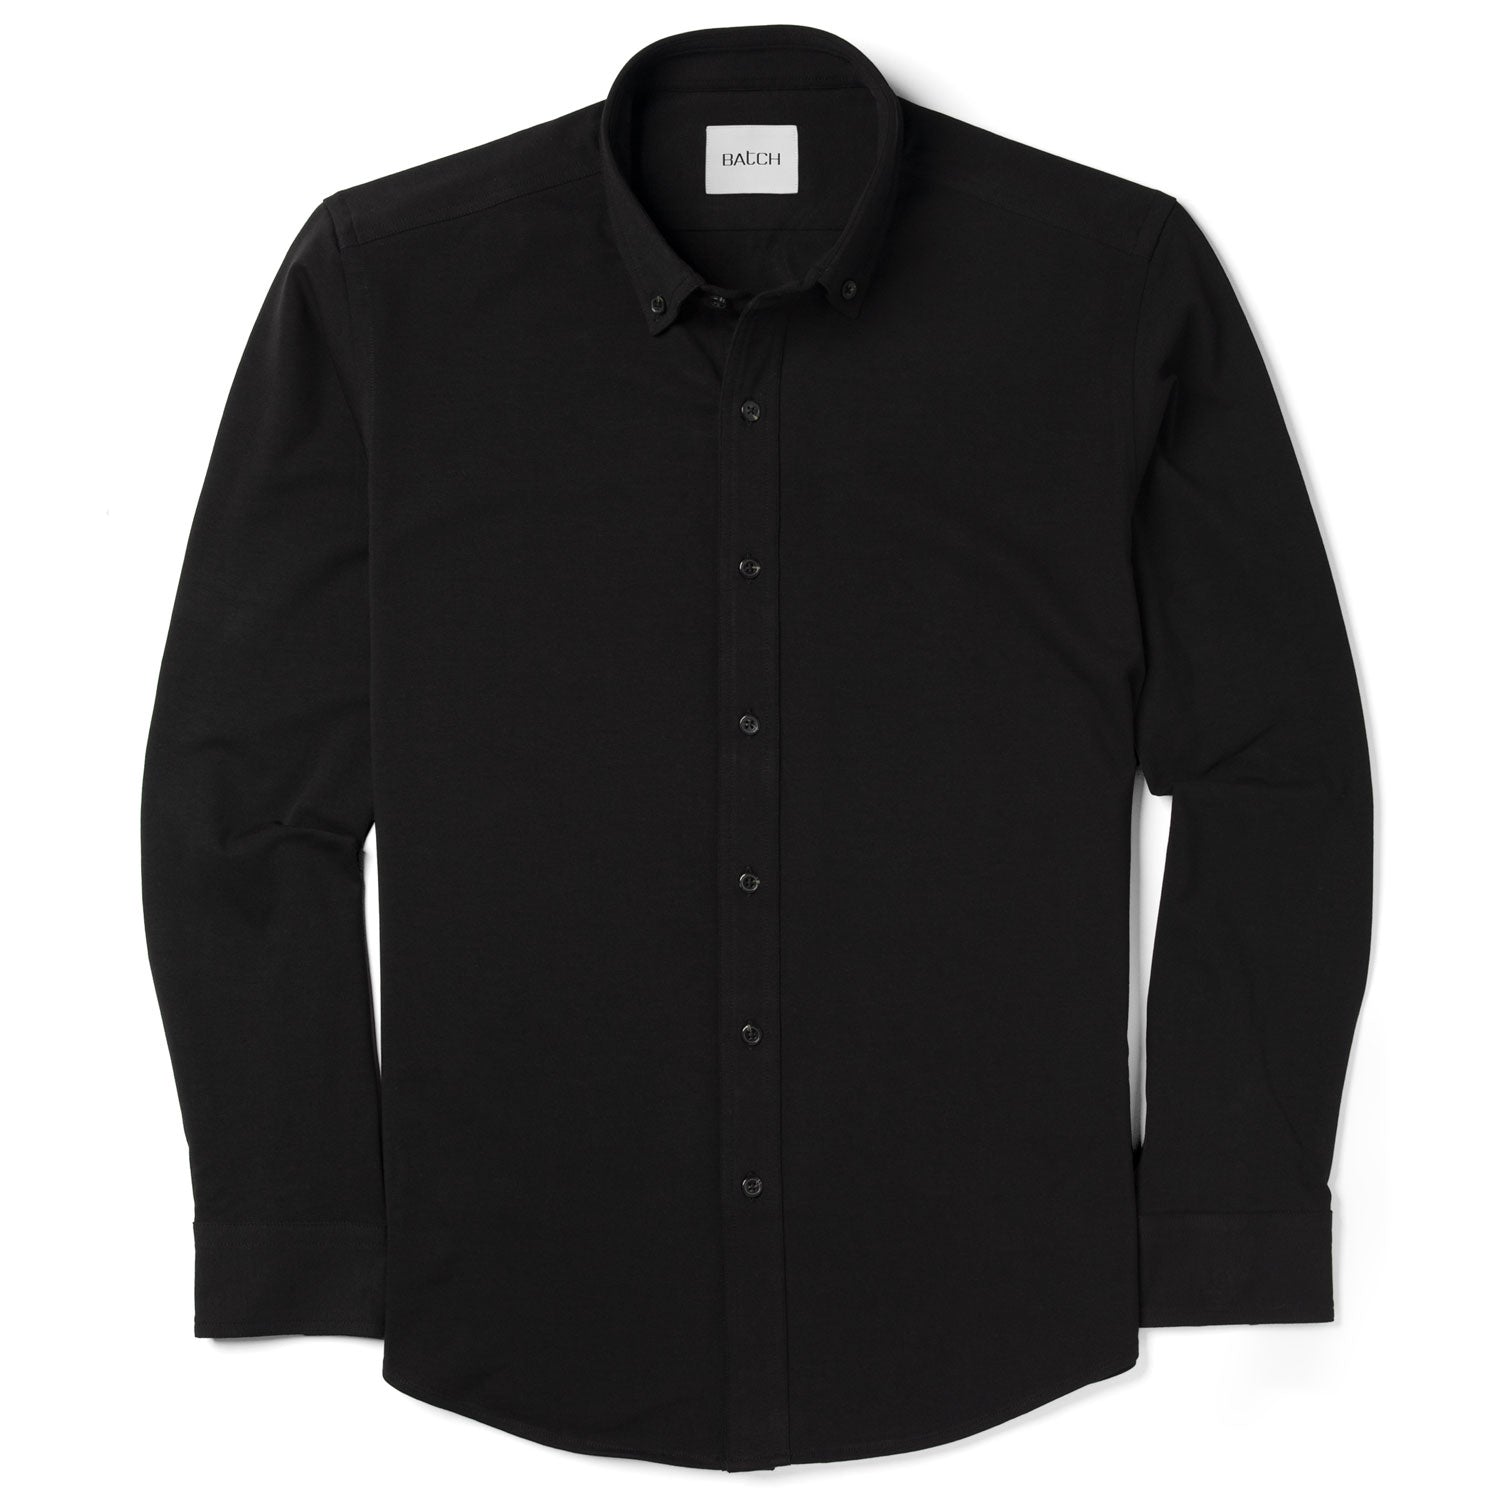 Essential BDC T-Shirt Shirt - Jet Black Cotton Span Jersey